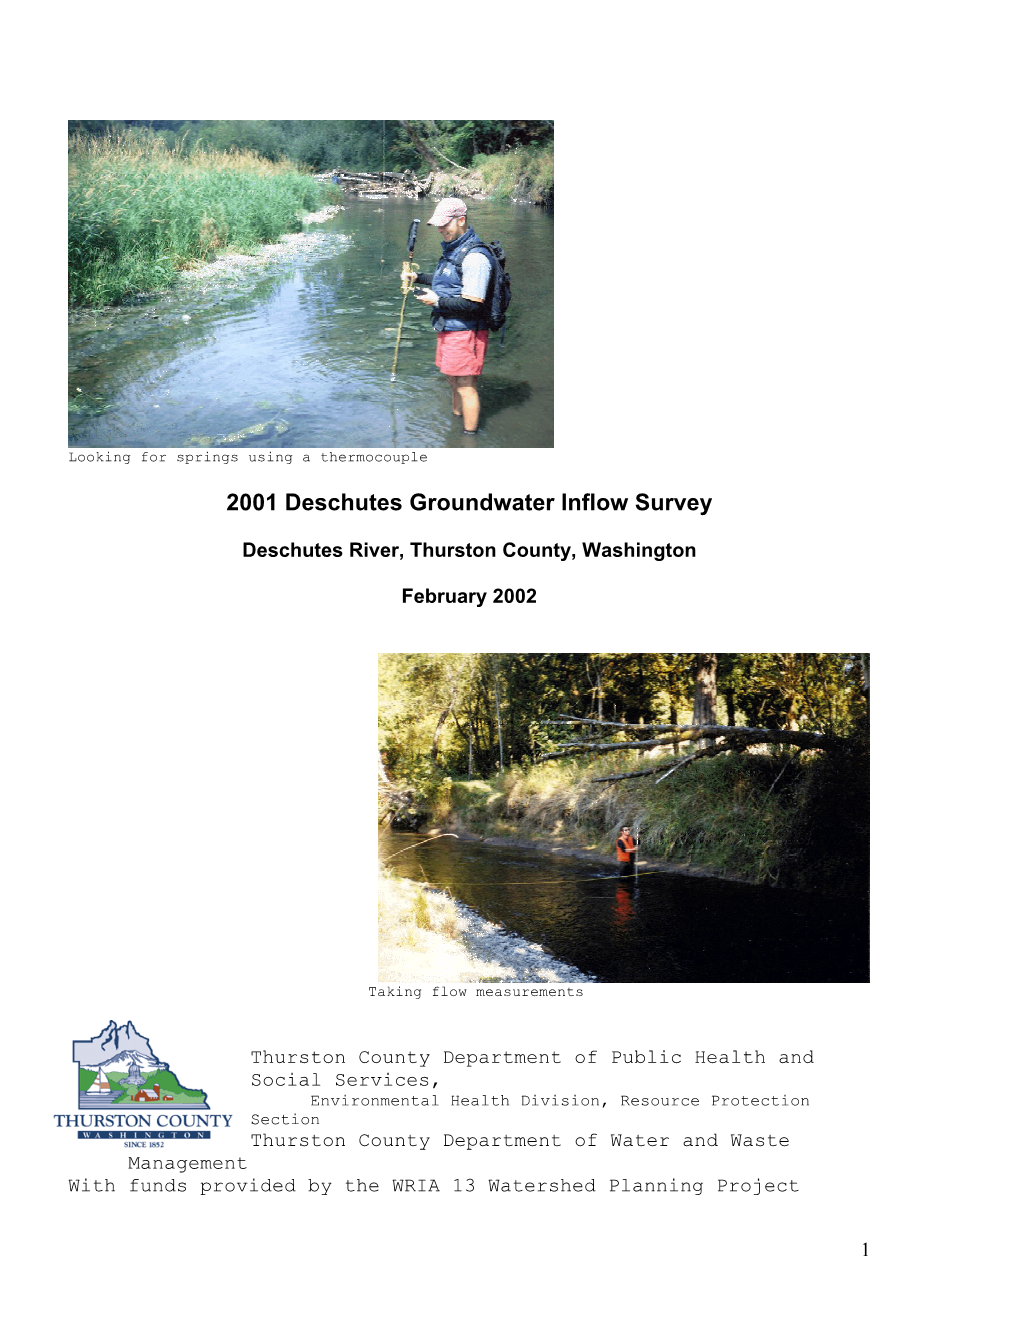 Deschutes River Groundwater Inflow Study Final Report